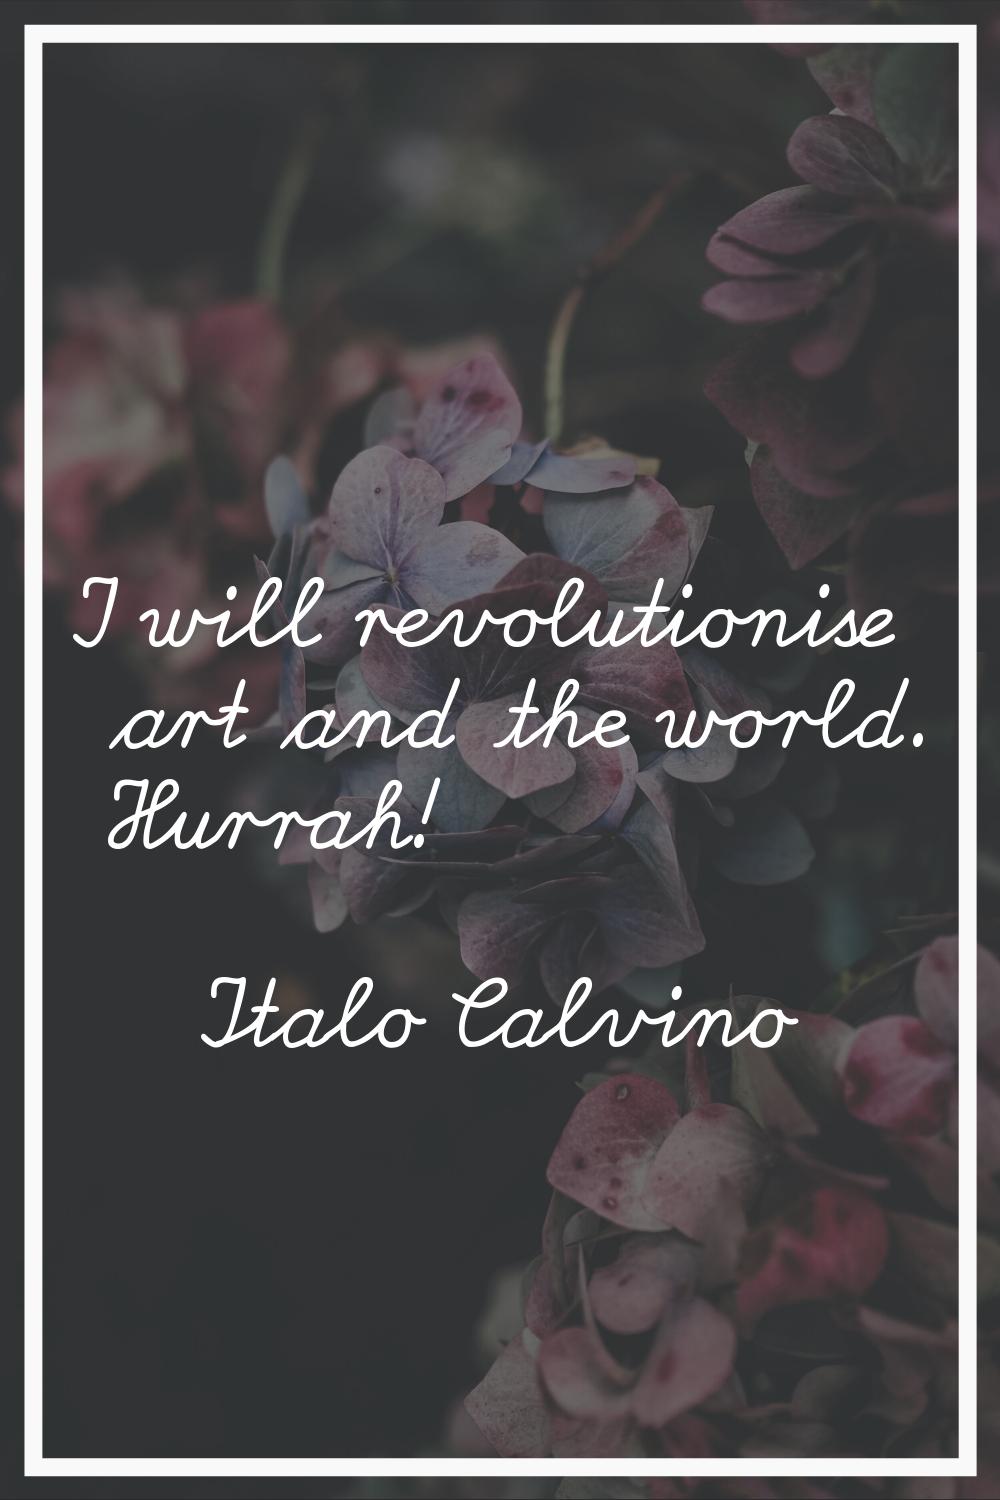 I will revolutionise art and the world. Hurrah!